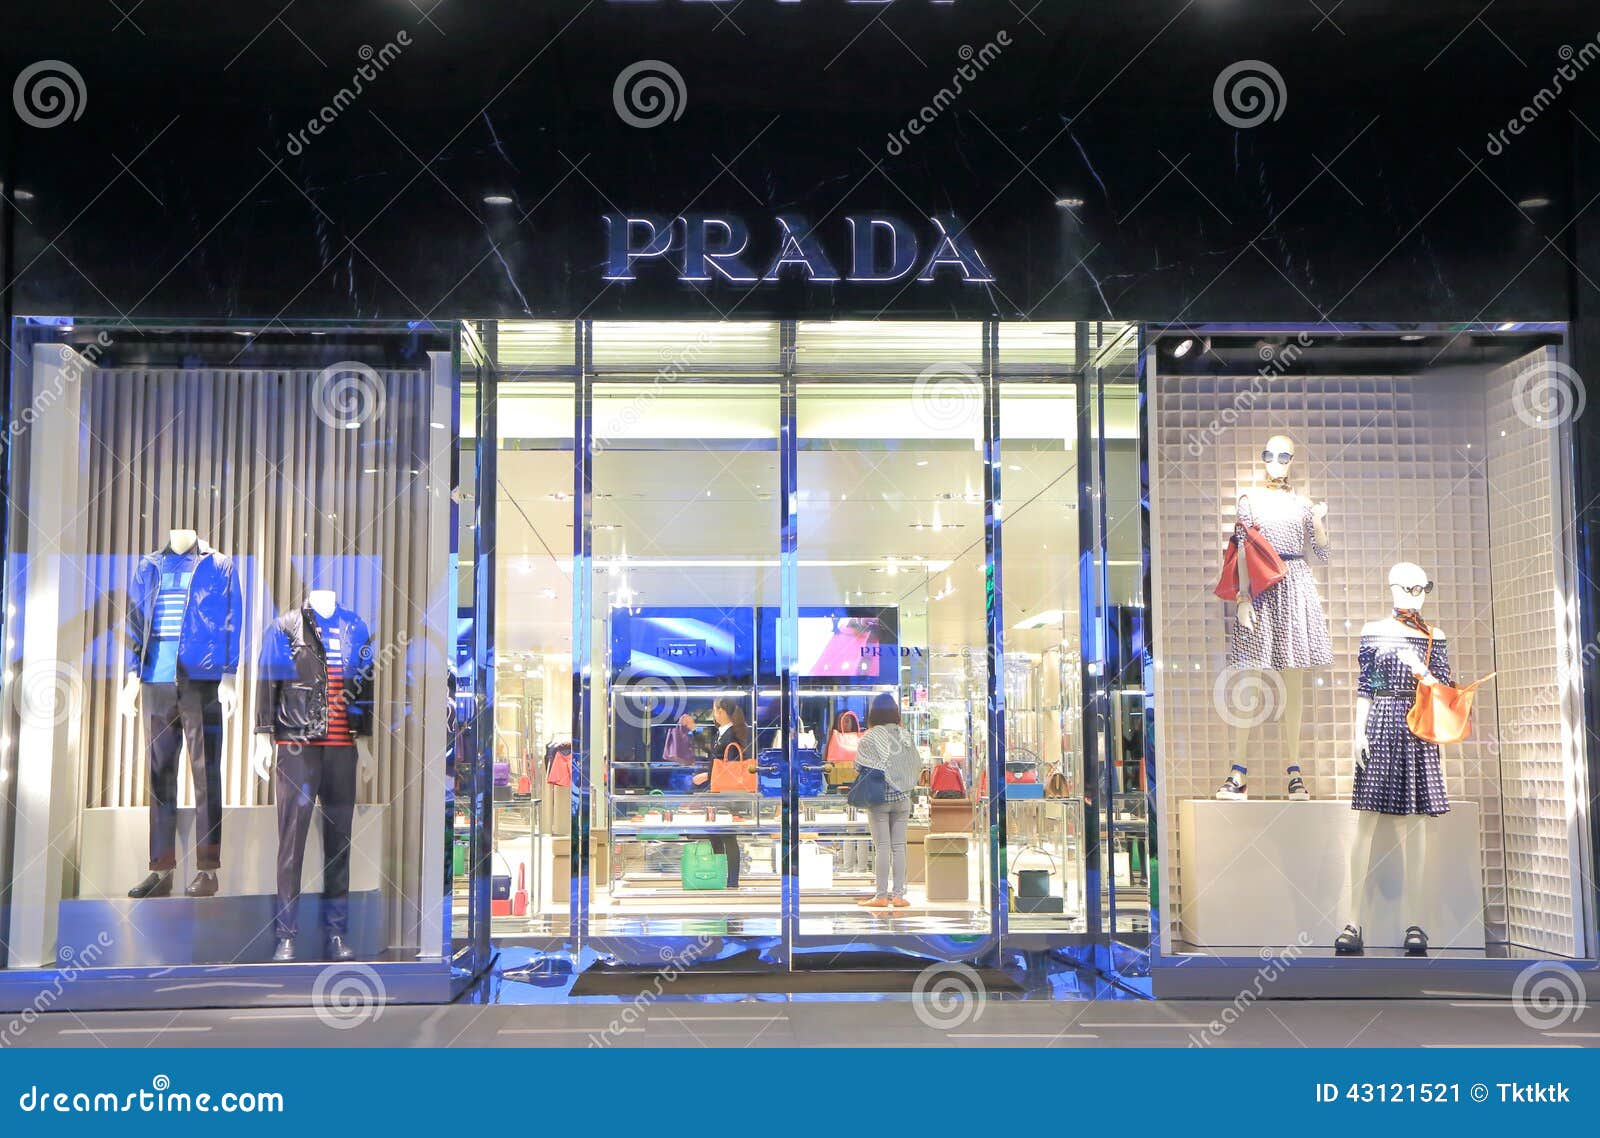 Prada Shop At Emquatier, Bangkok, Thailand, Mar 8, 2018 : Editorial ...